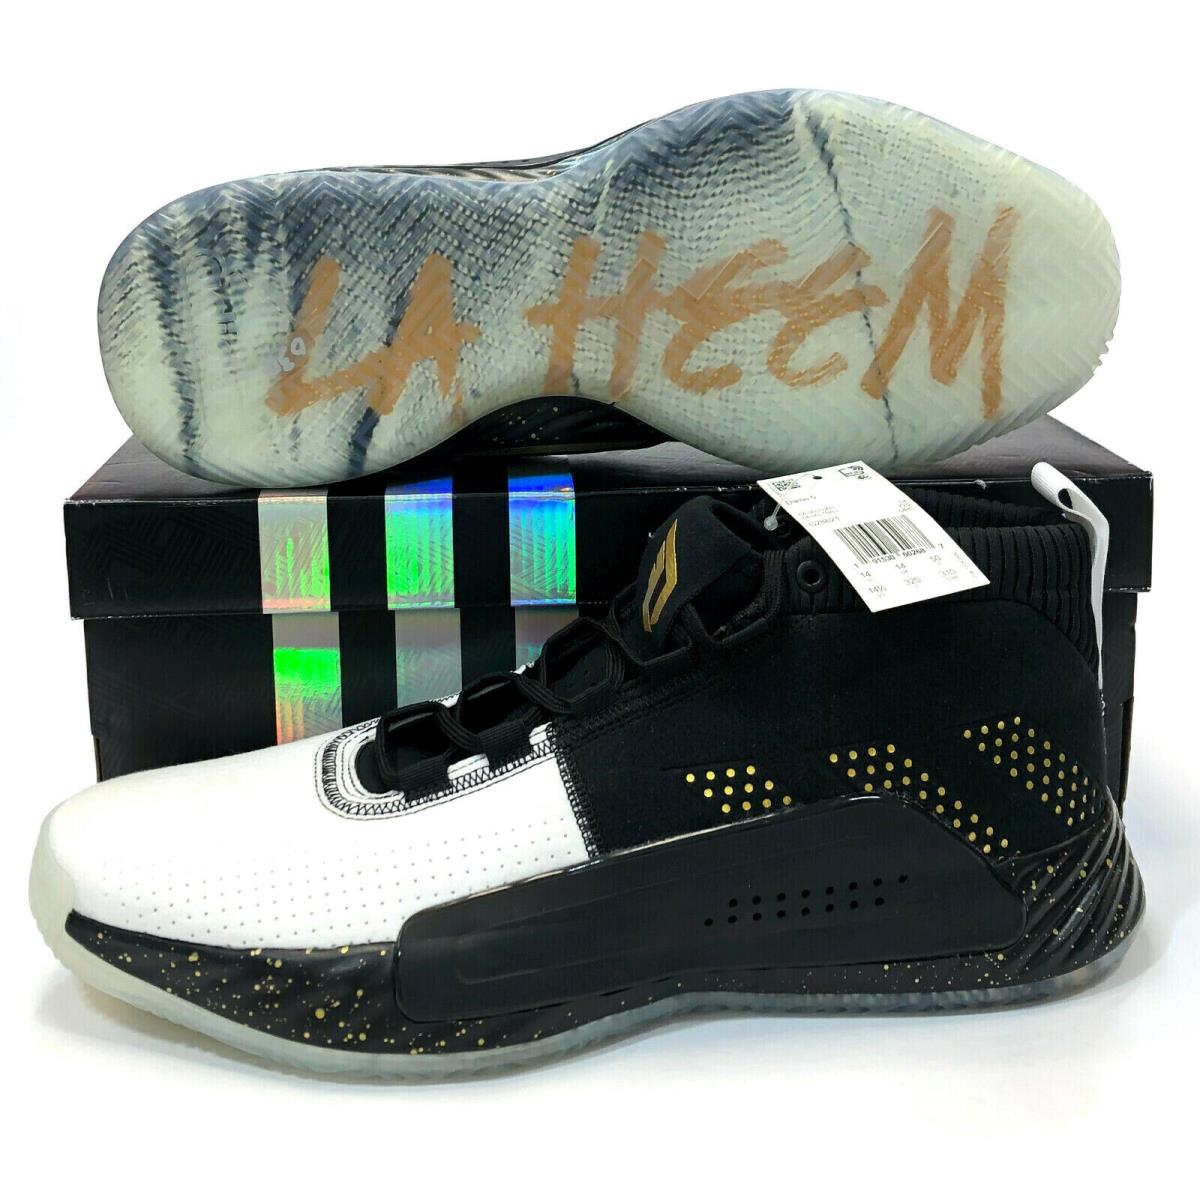 Adidas Damian Lillard Dame 5 G28821 `the Dream` Black Basketball Shoes Sz 14.5